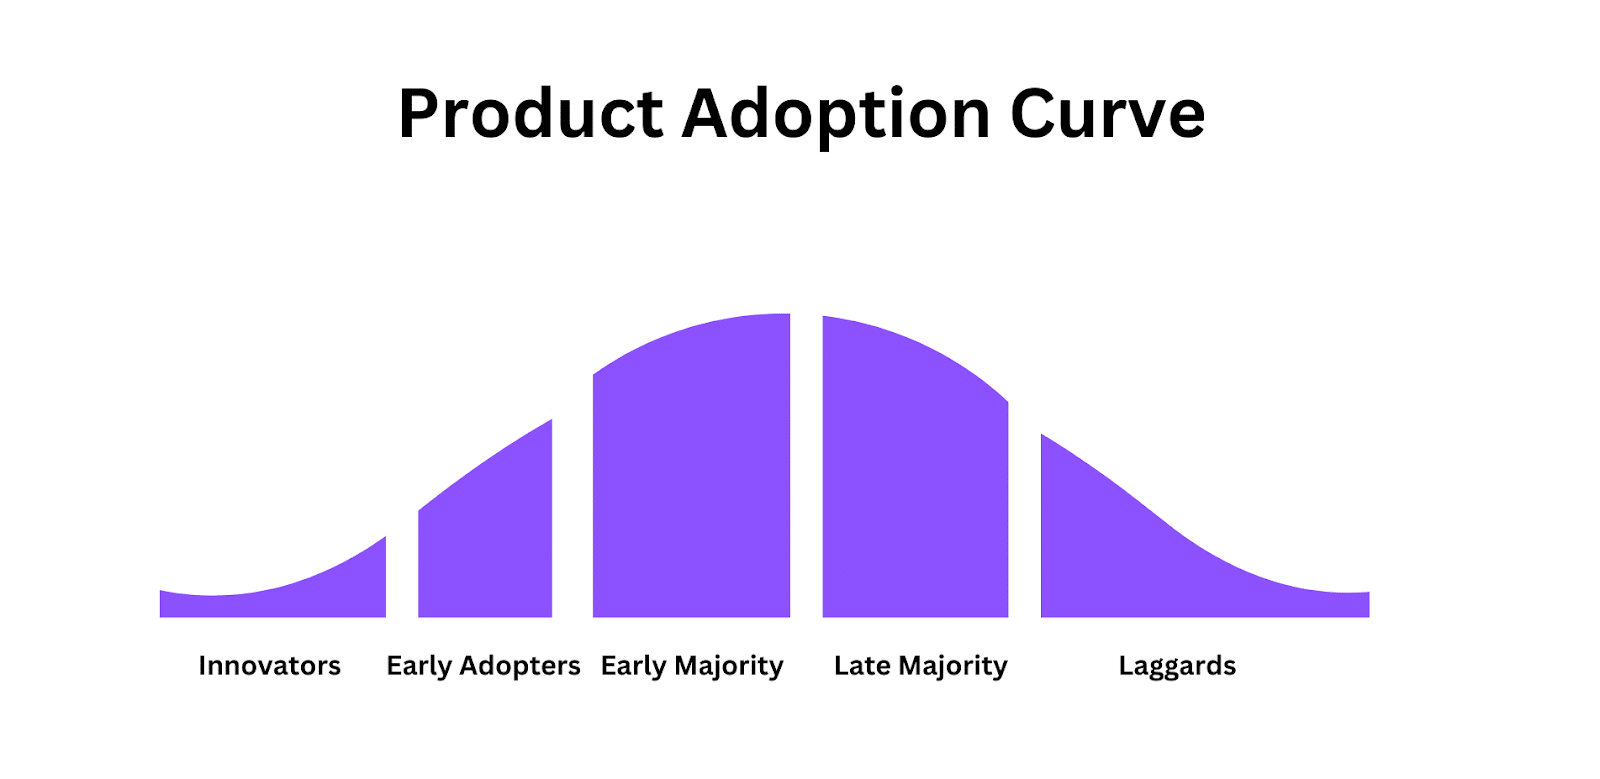 Product adoption curve | Source: scribehow.com